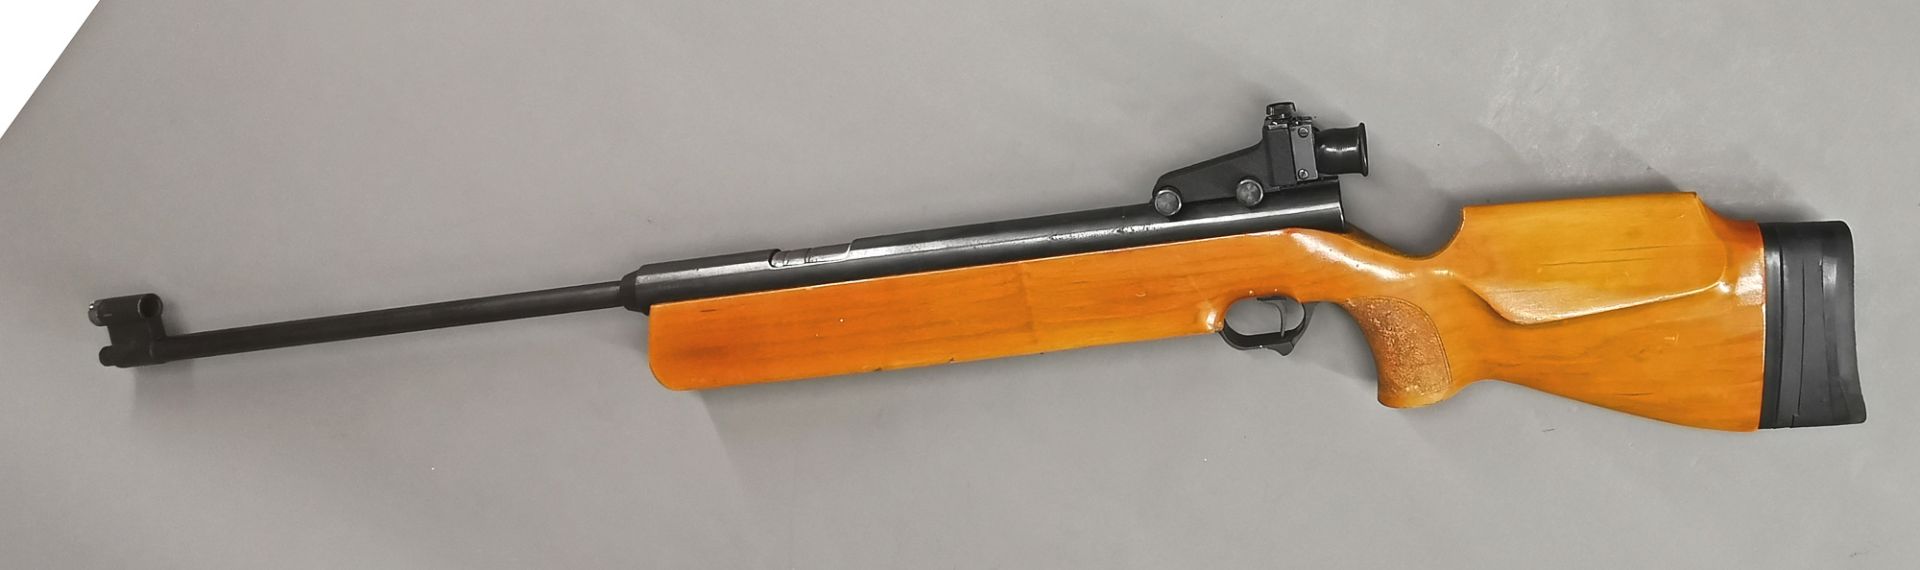 Match - Luftgewehr Haenel Modell 312 - Image 2 of 4